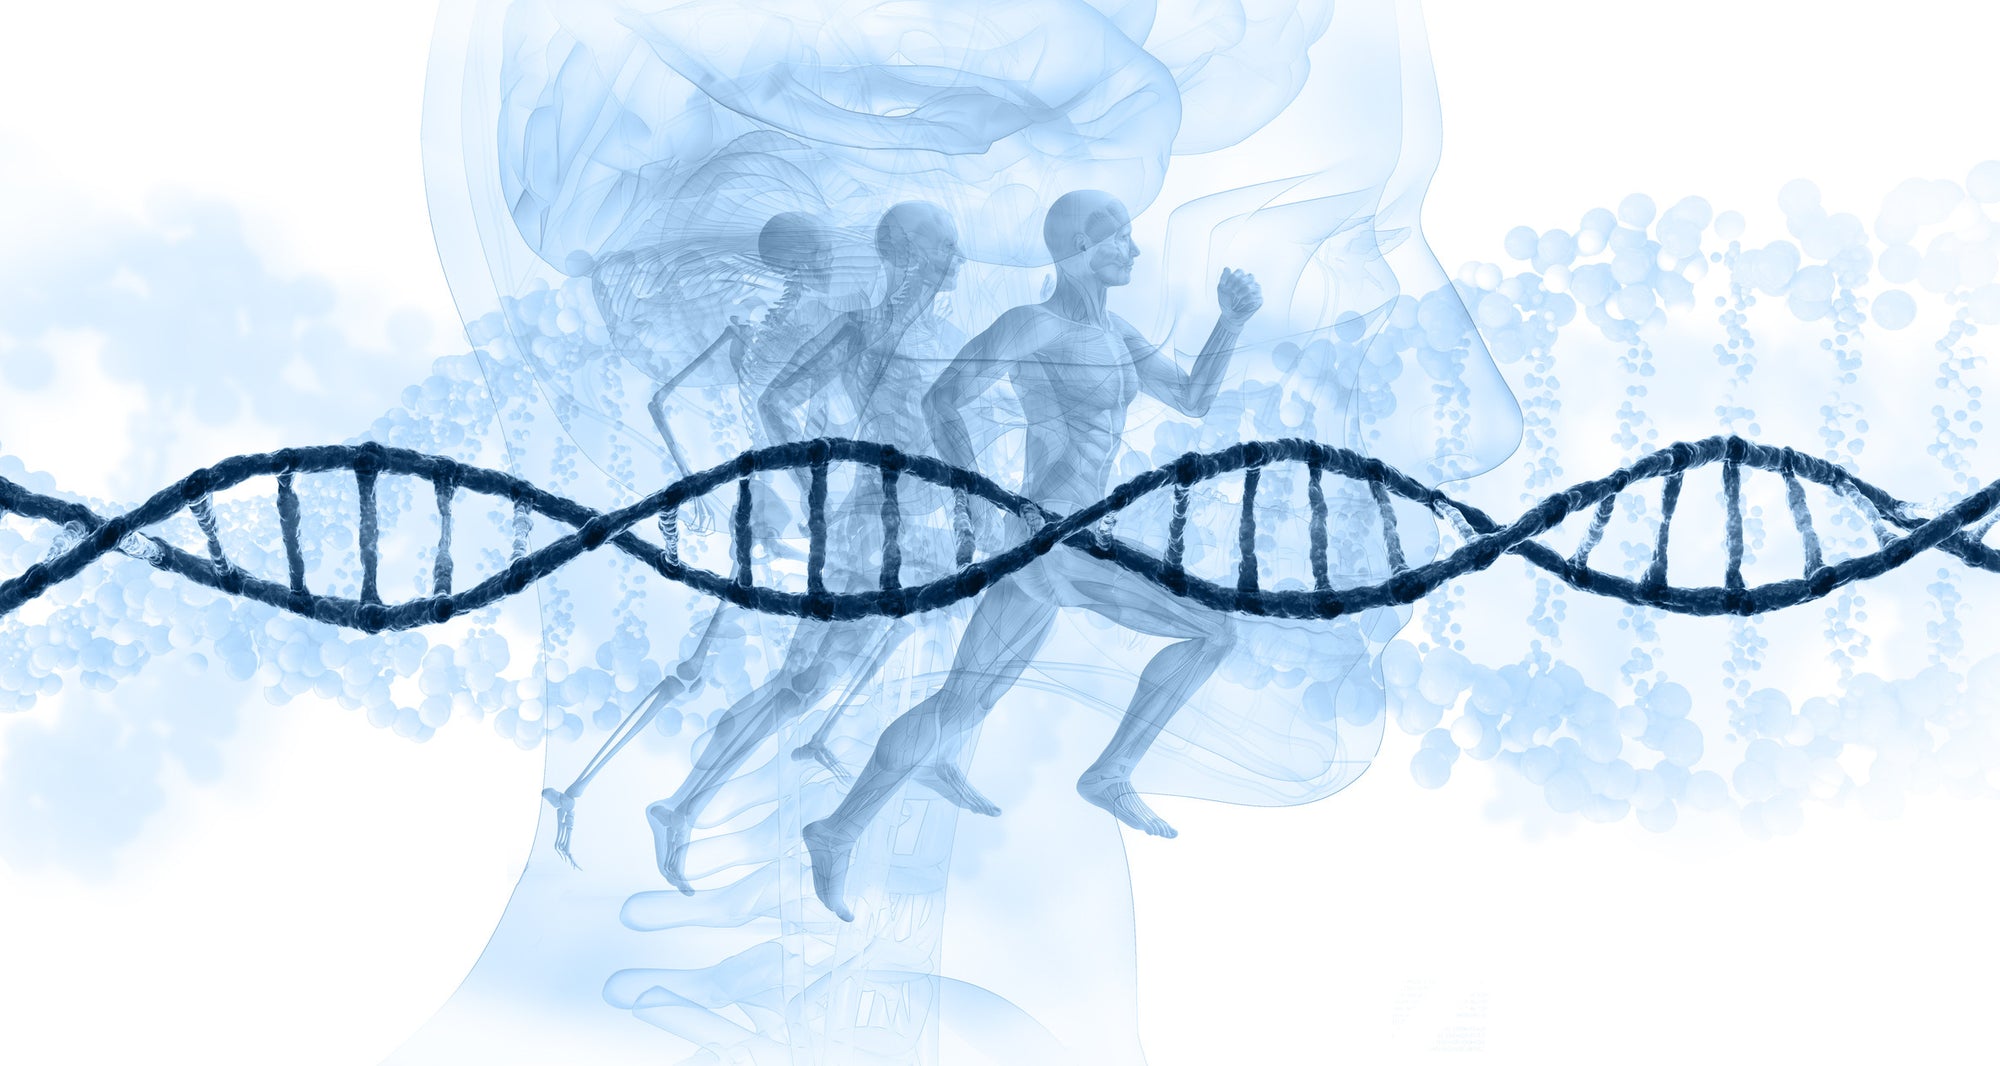 DNA and running men